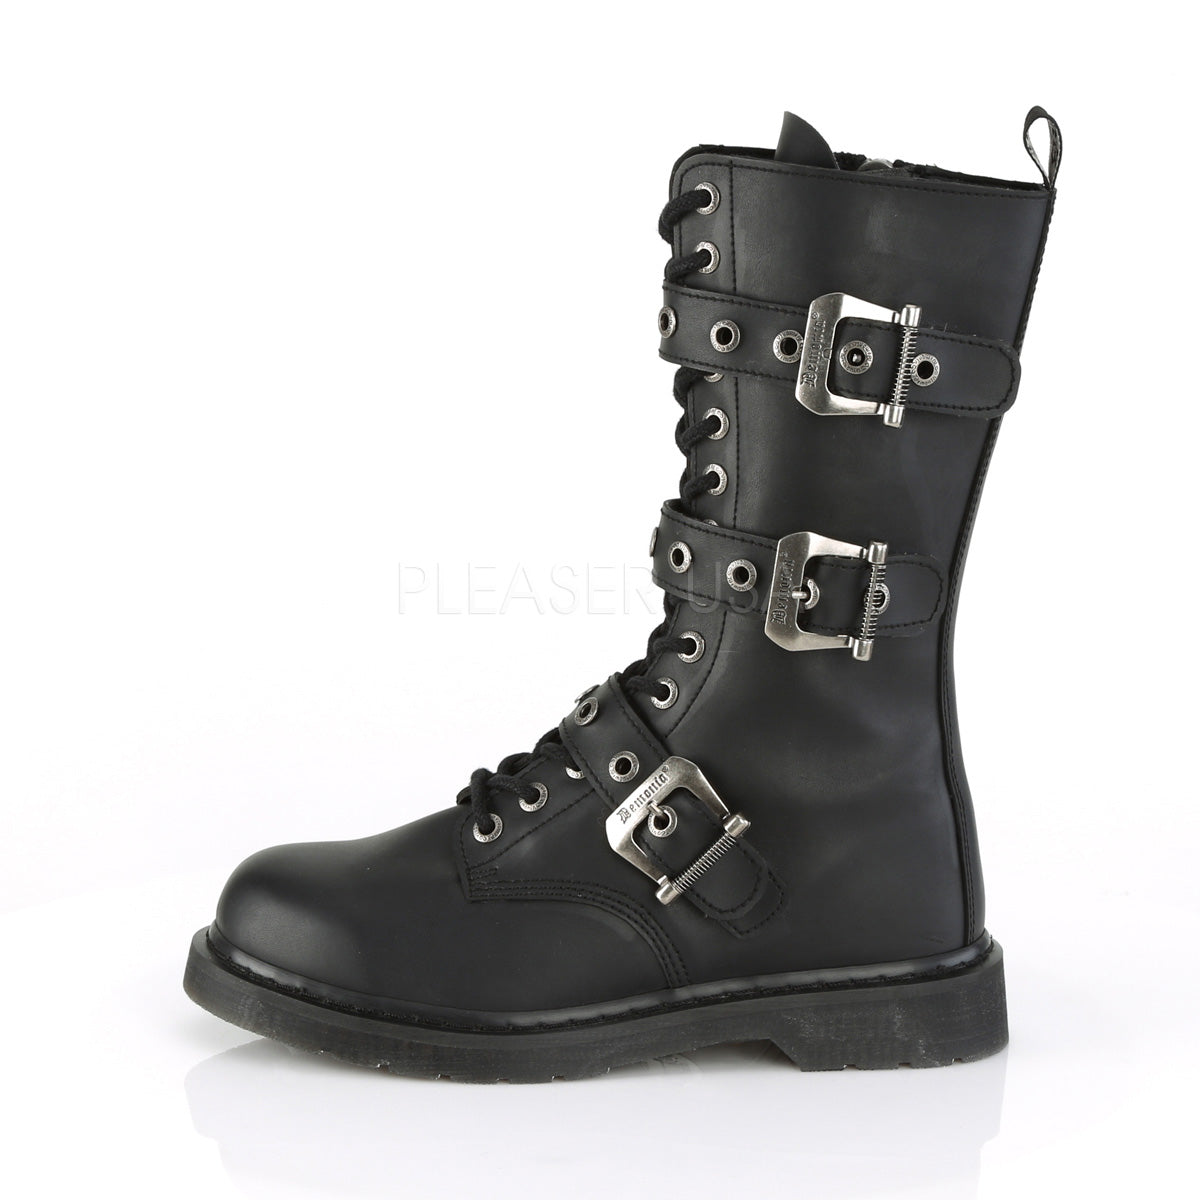 IN STOCK / SALE - DEMONIA Bolt-330 Black Vegan Leather Boots Men's 6 Women's 8 - A Shoe Addiction